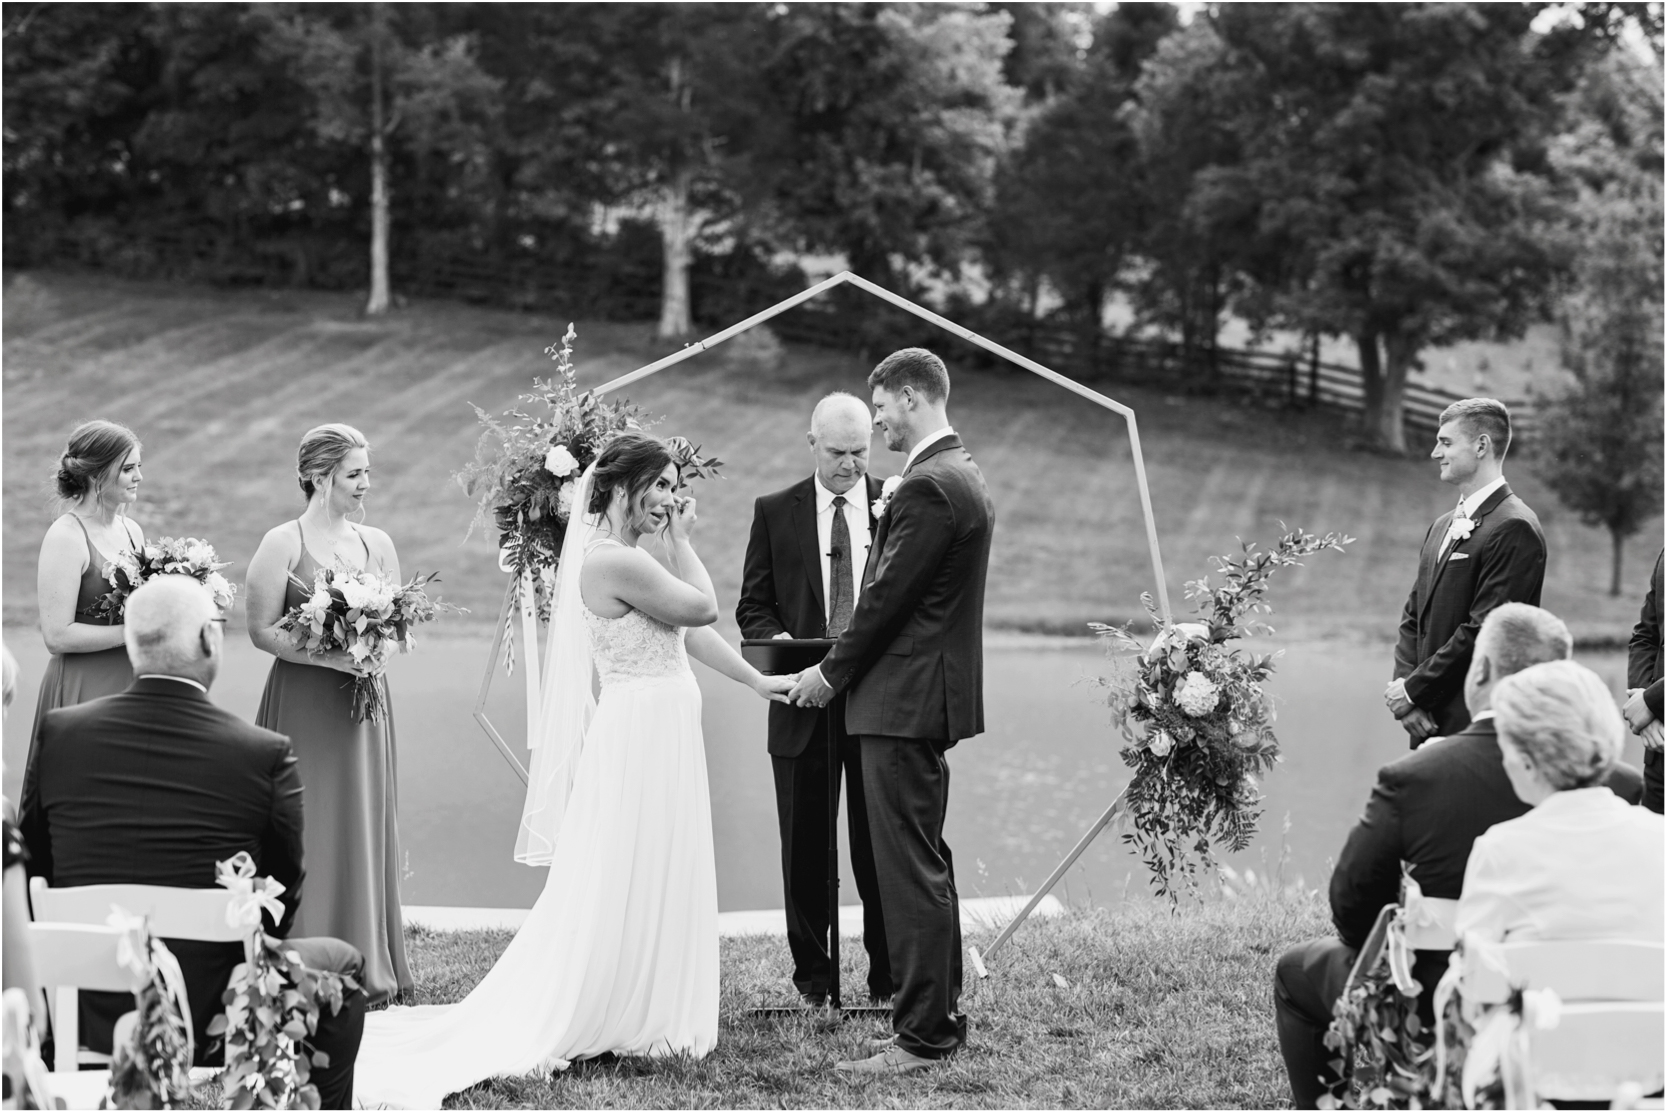 Kentucky Wedding Venue Hazelnut Farm Outdoor Ceremony Bride 